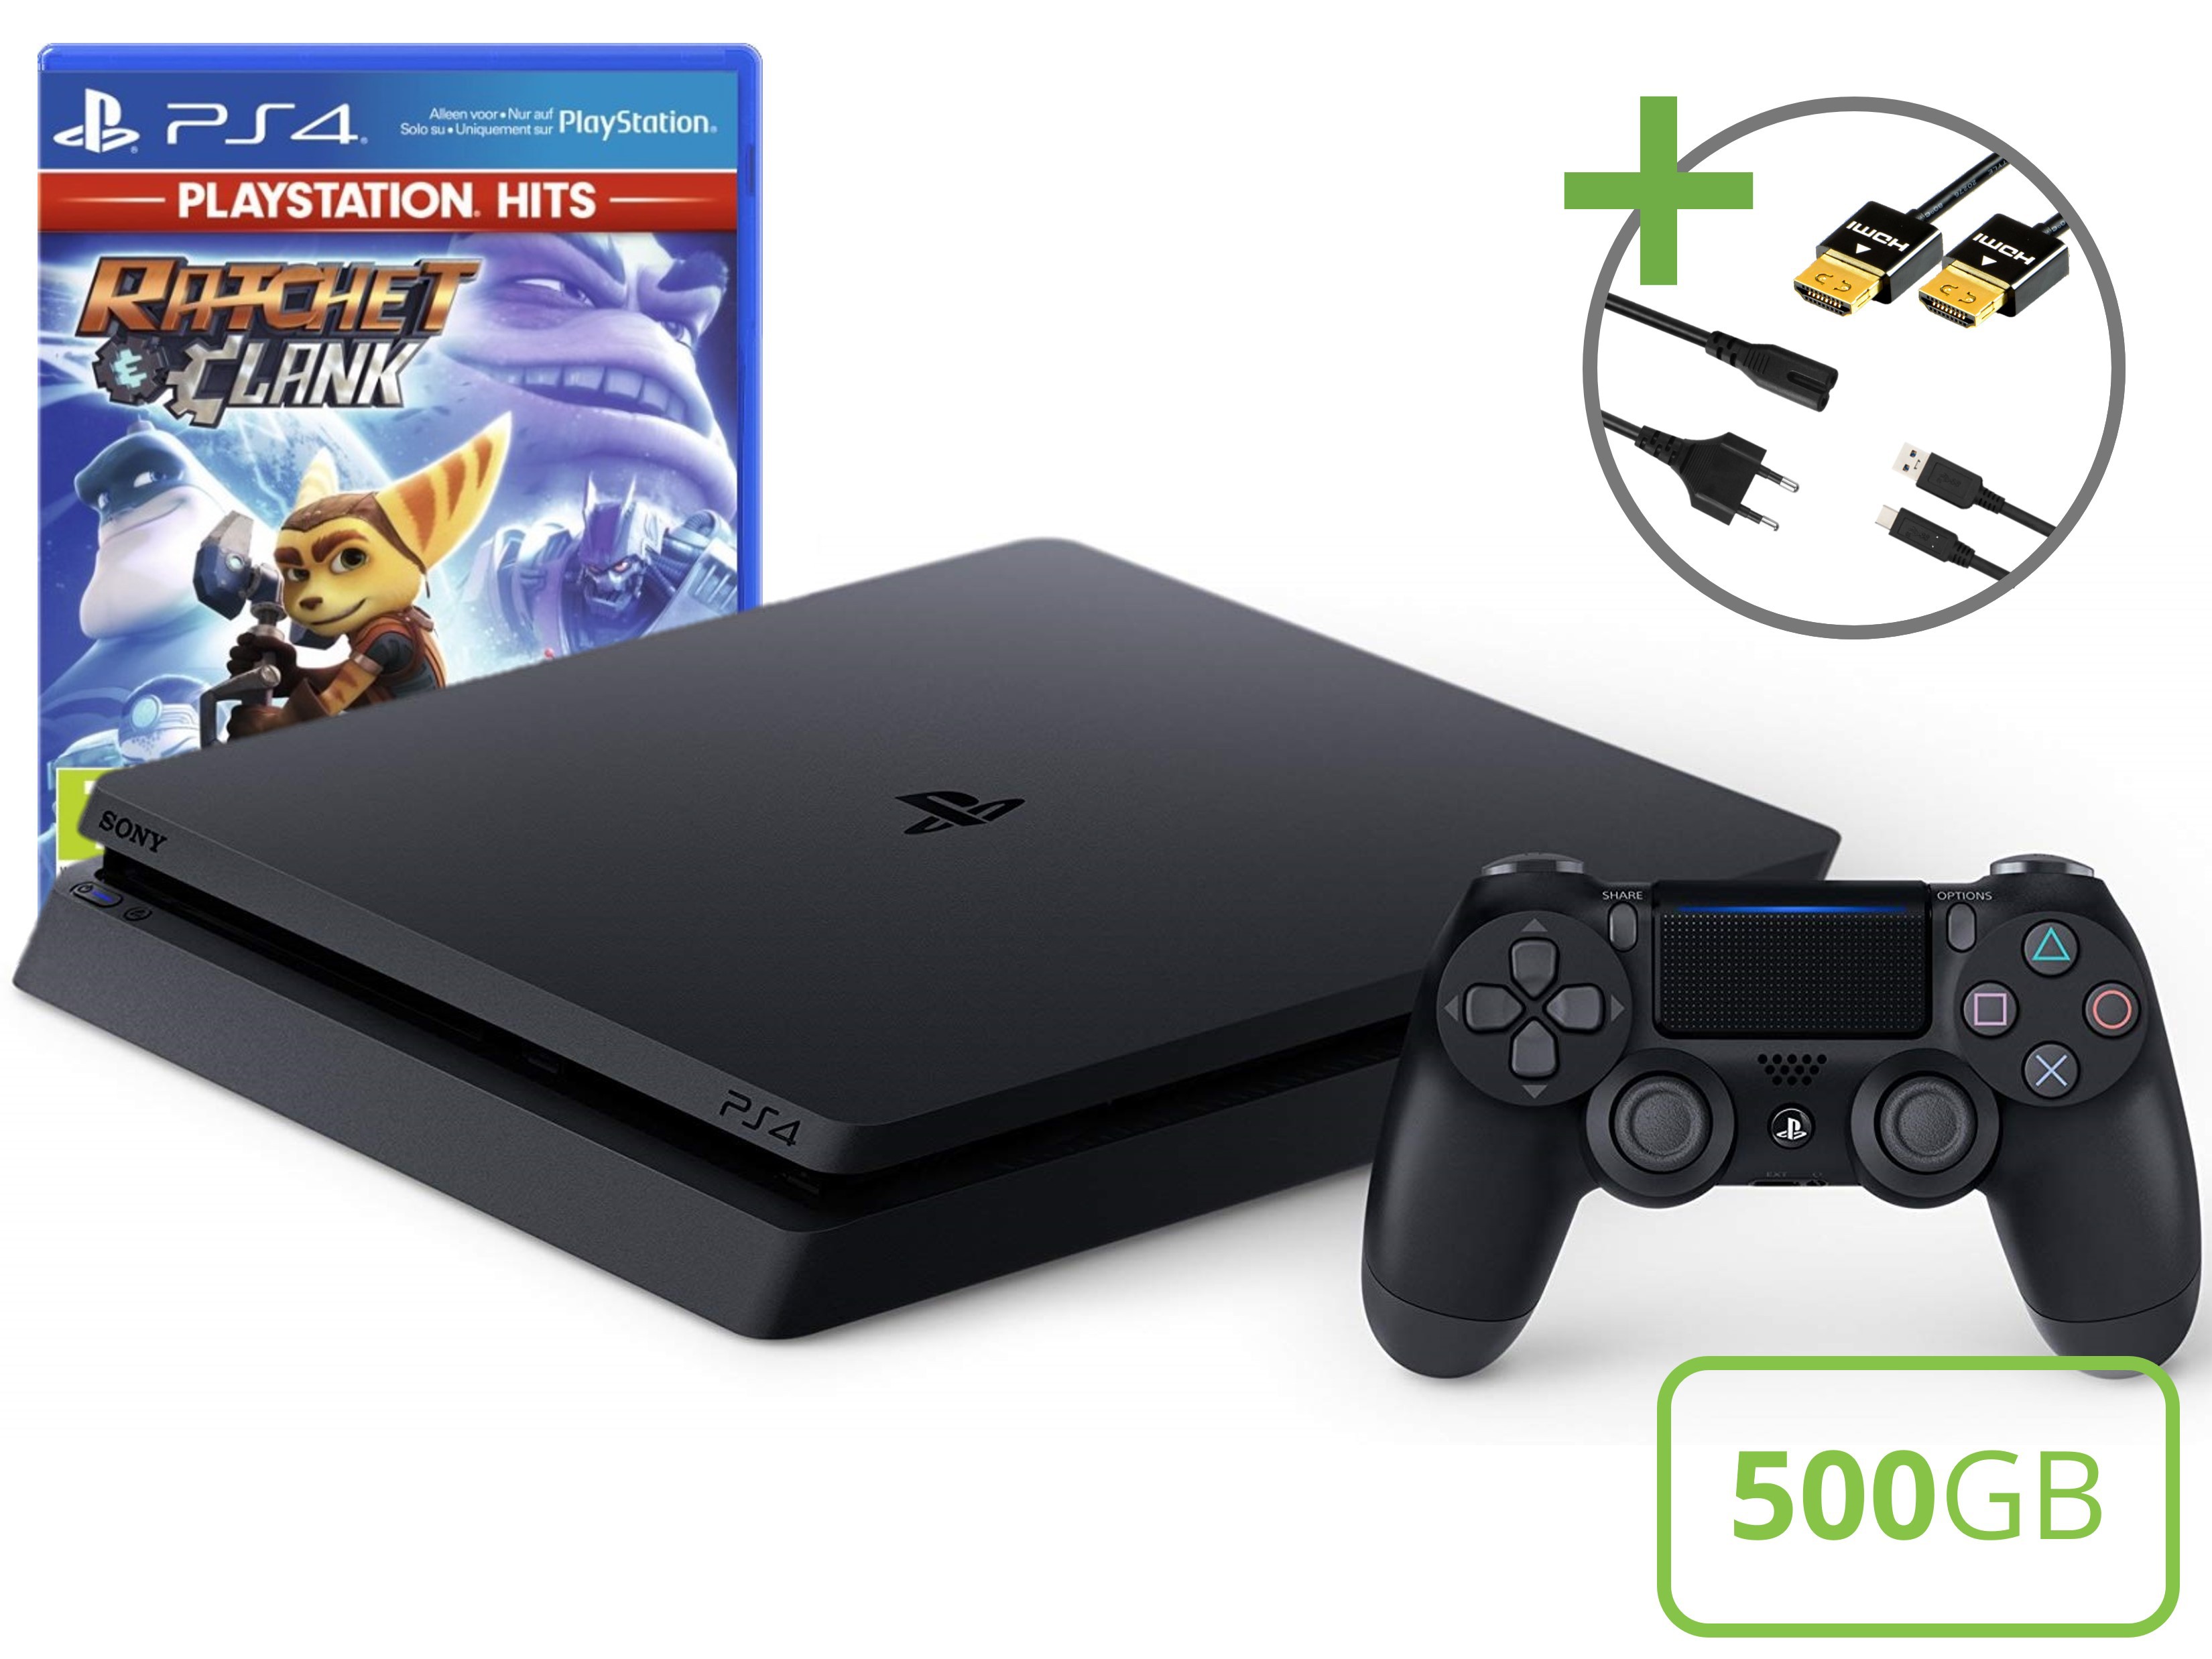 Sony PlayStation 4 Slim Starter Pack - 500GB Ratchet & Clank Edition Kopen | Playstation 4 Hardware